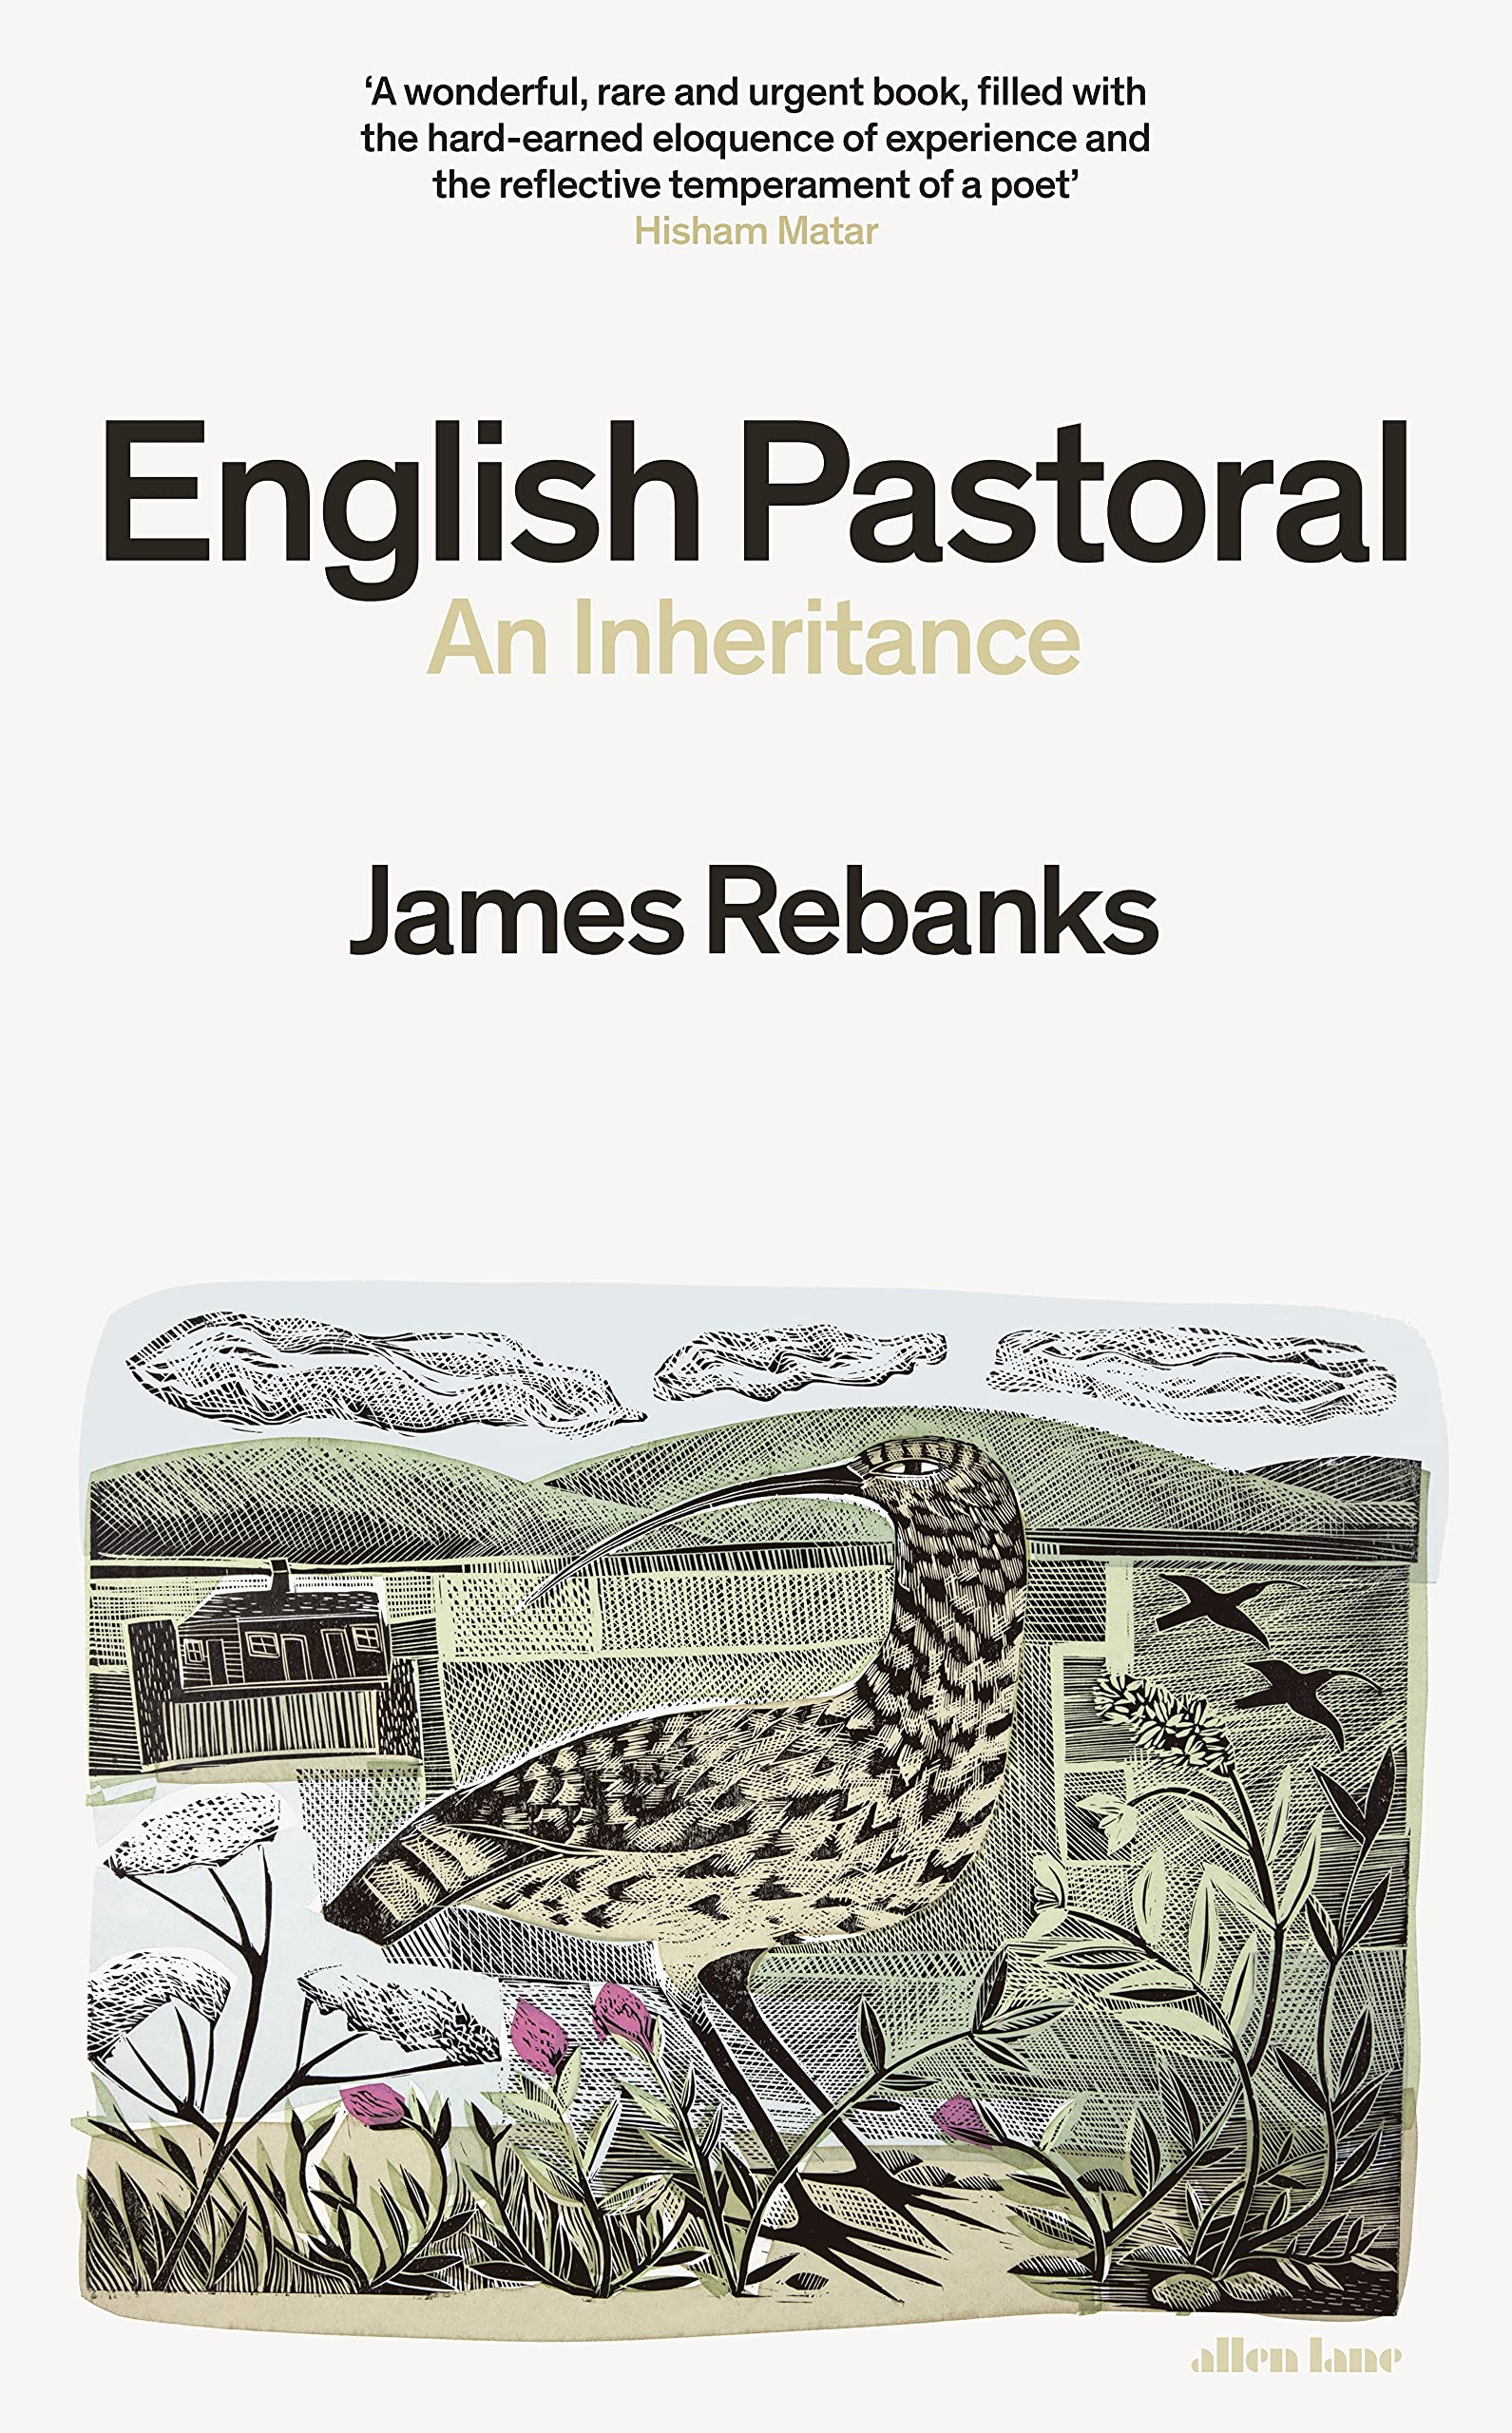 English Pastoral (2020, Penguin Books, Limited)